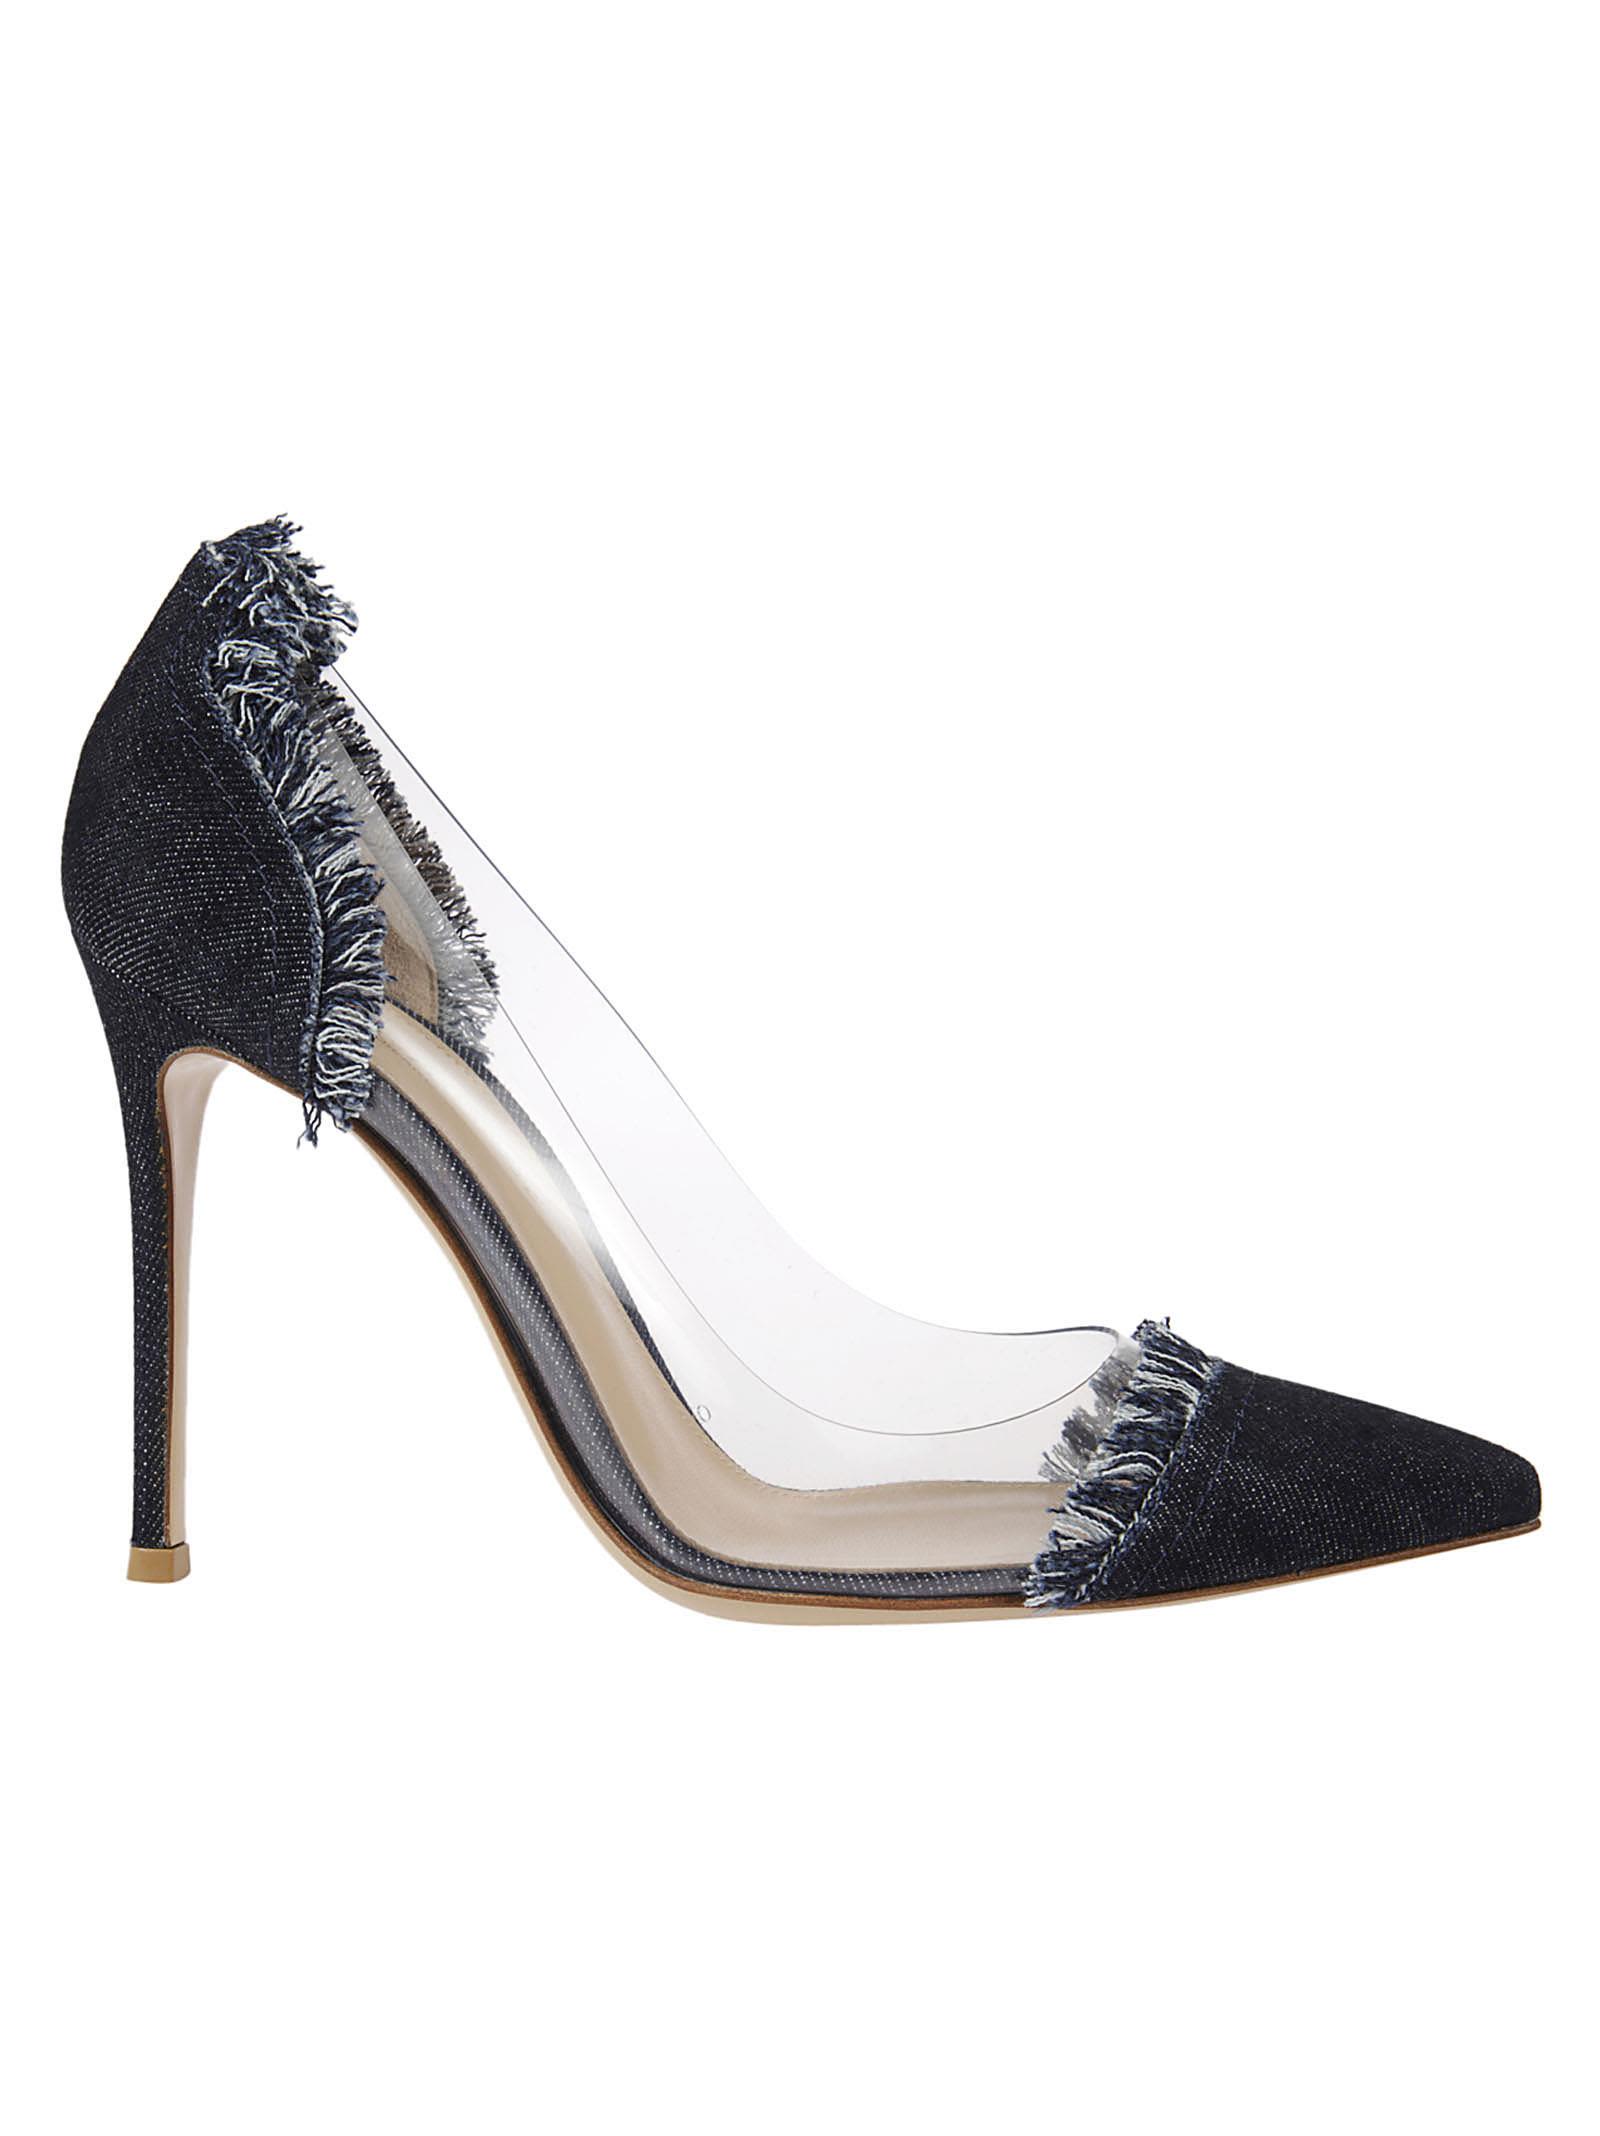 Gianvito Rossi - Gianvito Rossi Denim Pumps, Women's High-heeled shoes ...